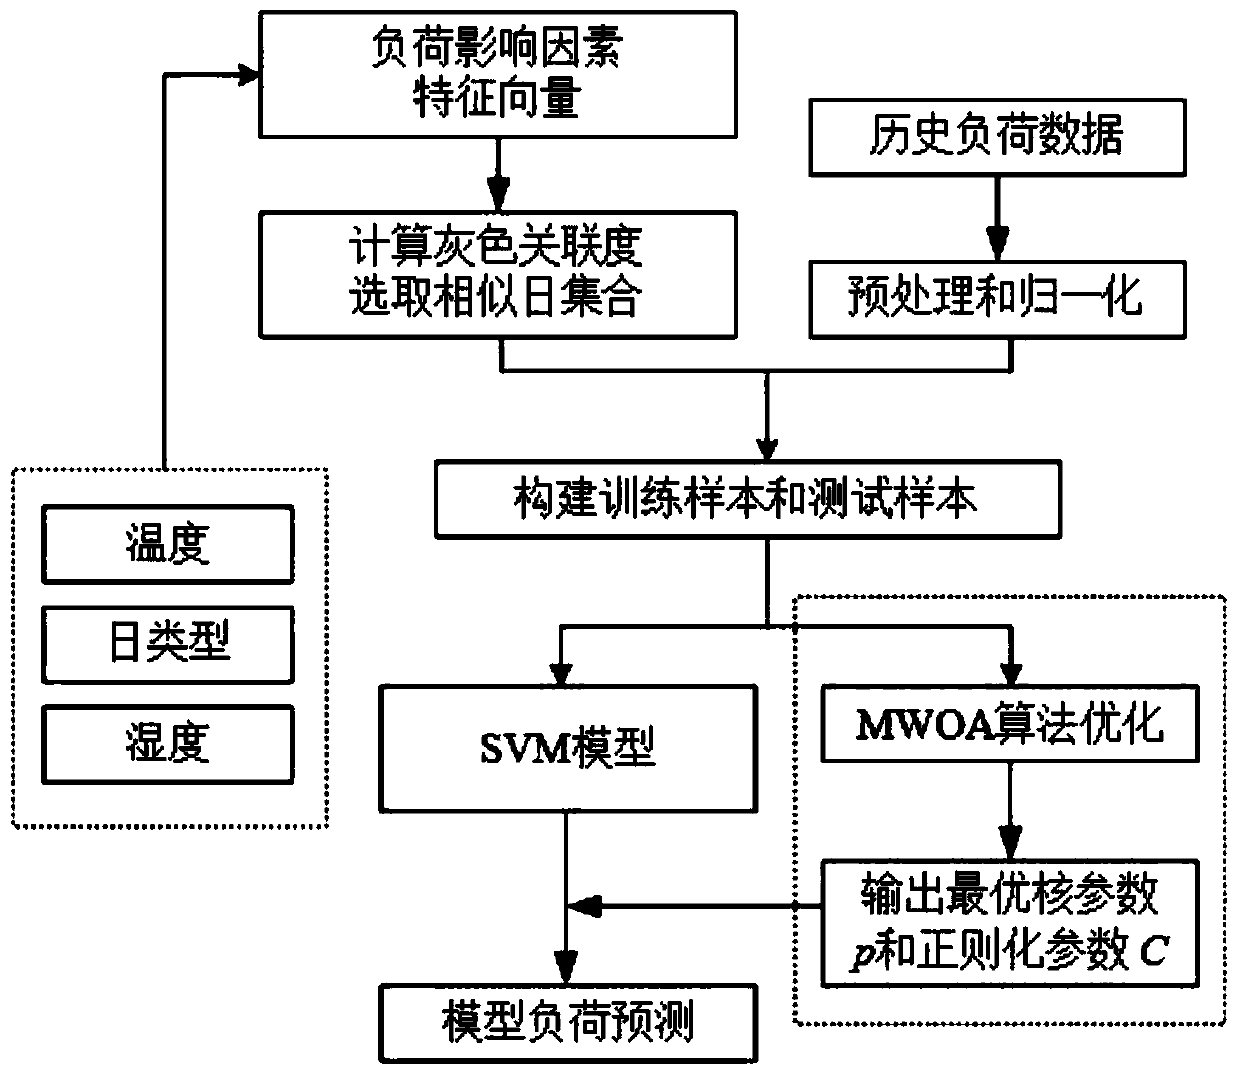 Short-term load prediction method for optimizing SVM based on MWOA algorithm